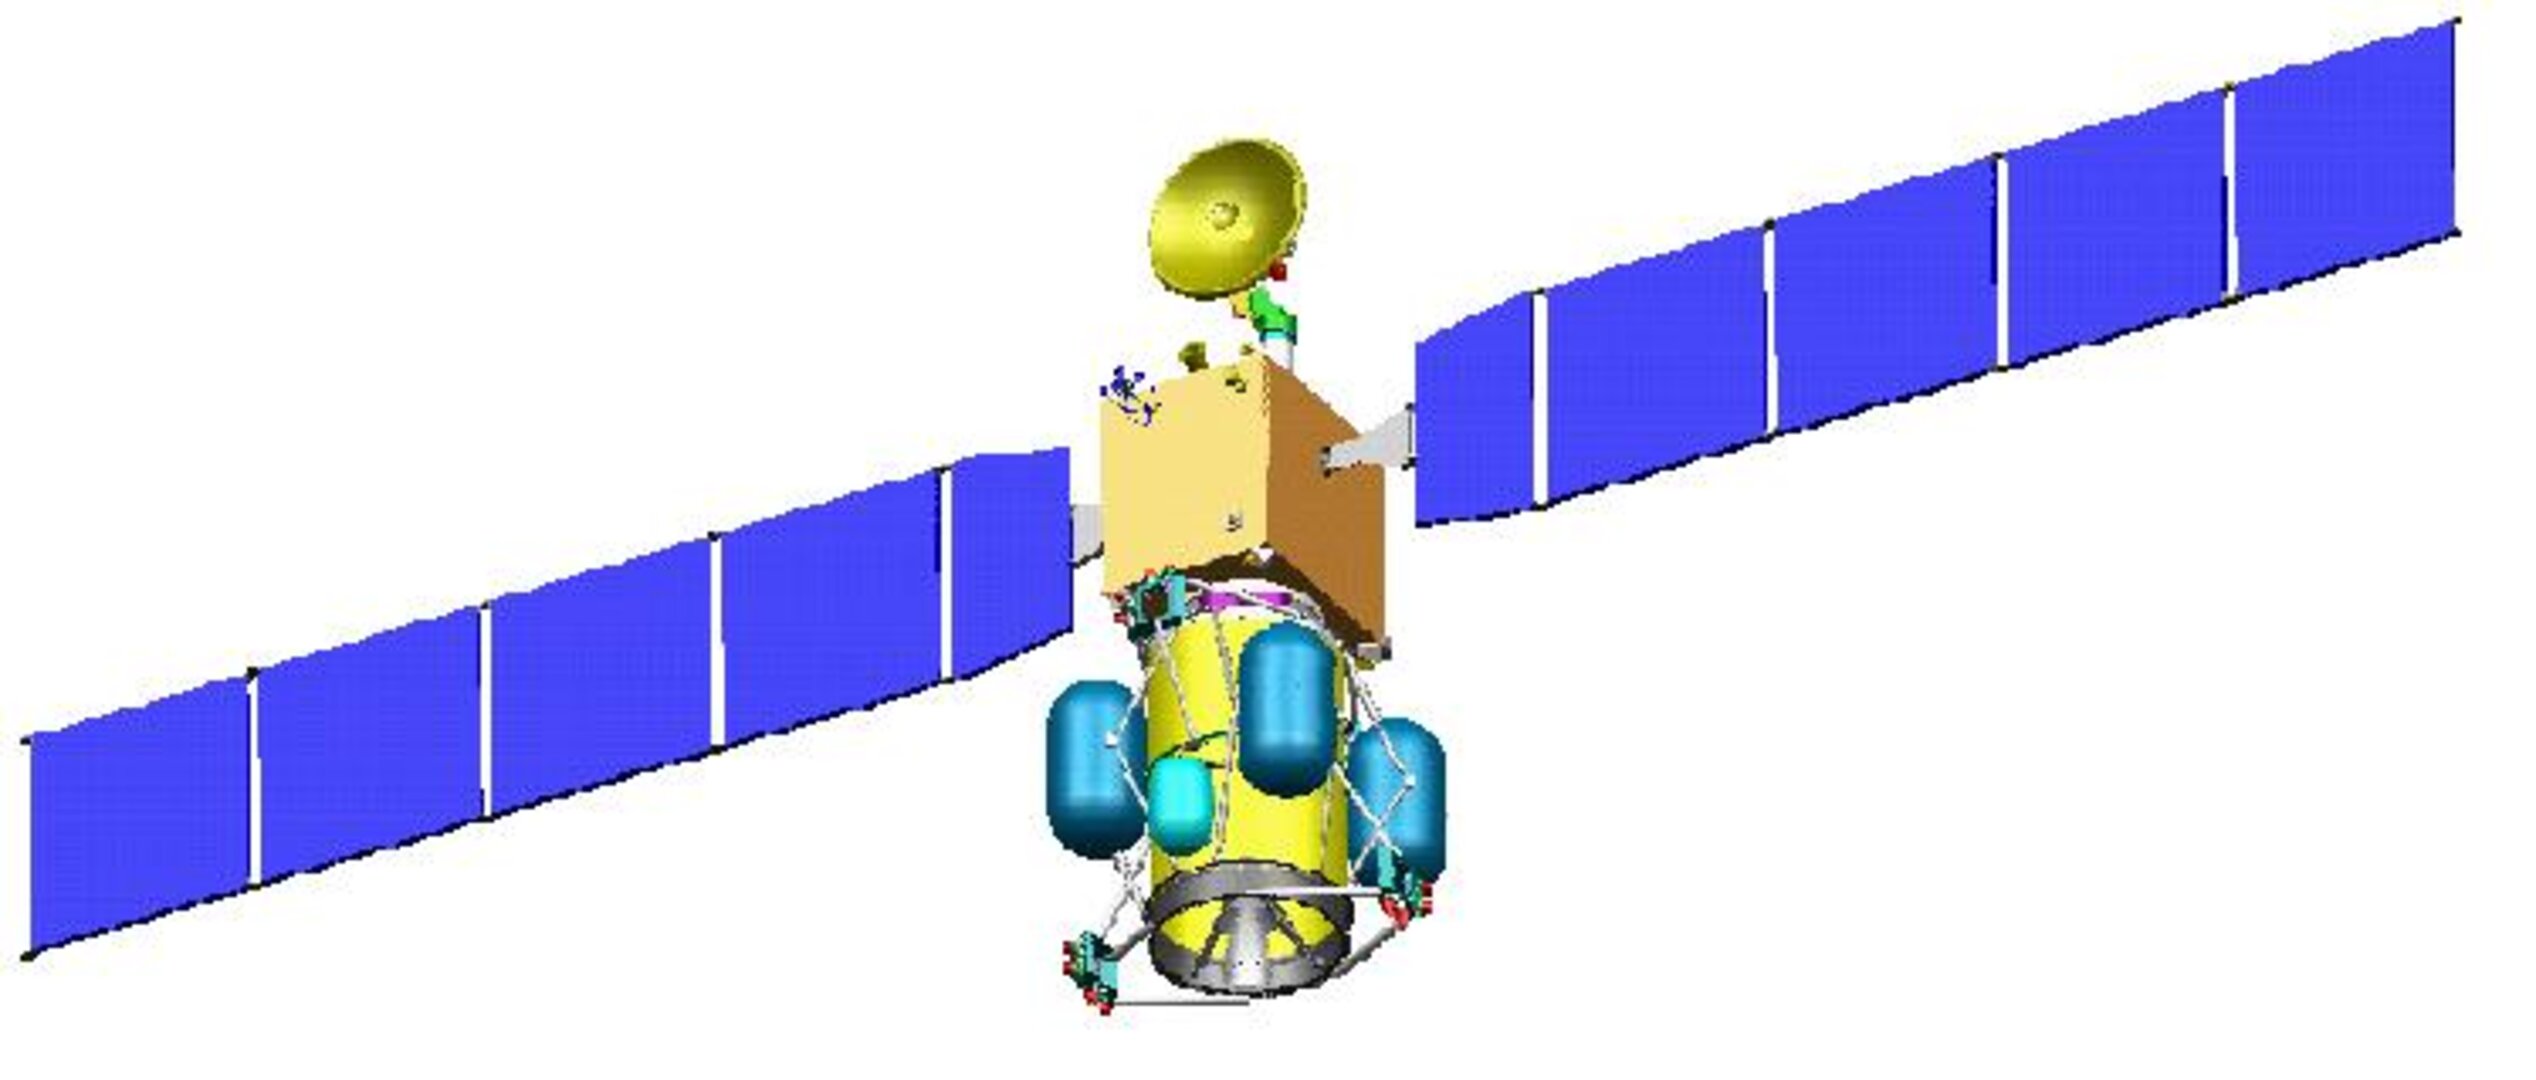 Alcatel Alenia Space Orbiter design on top of the ExoMars propulsion module